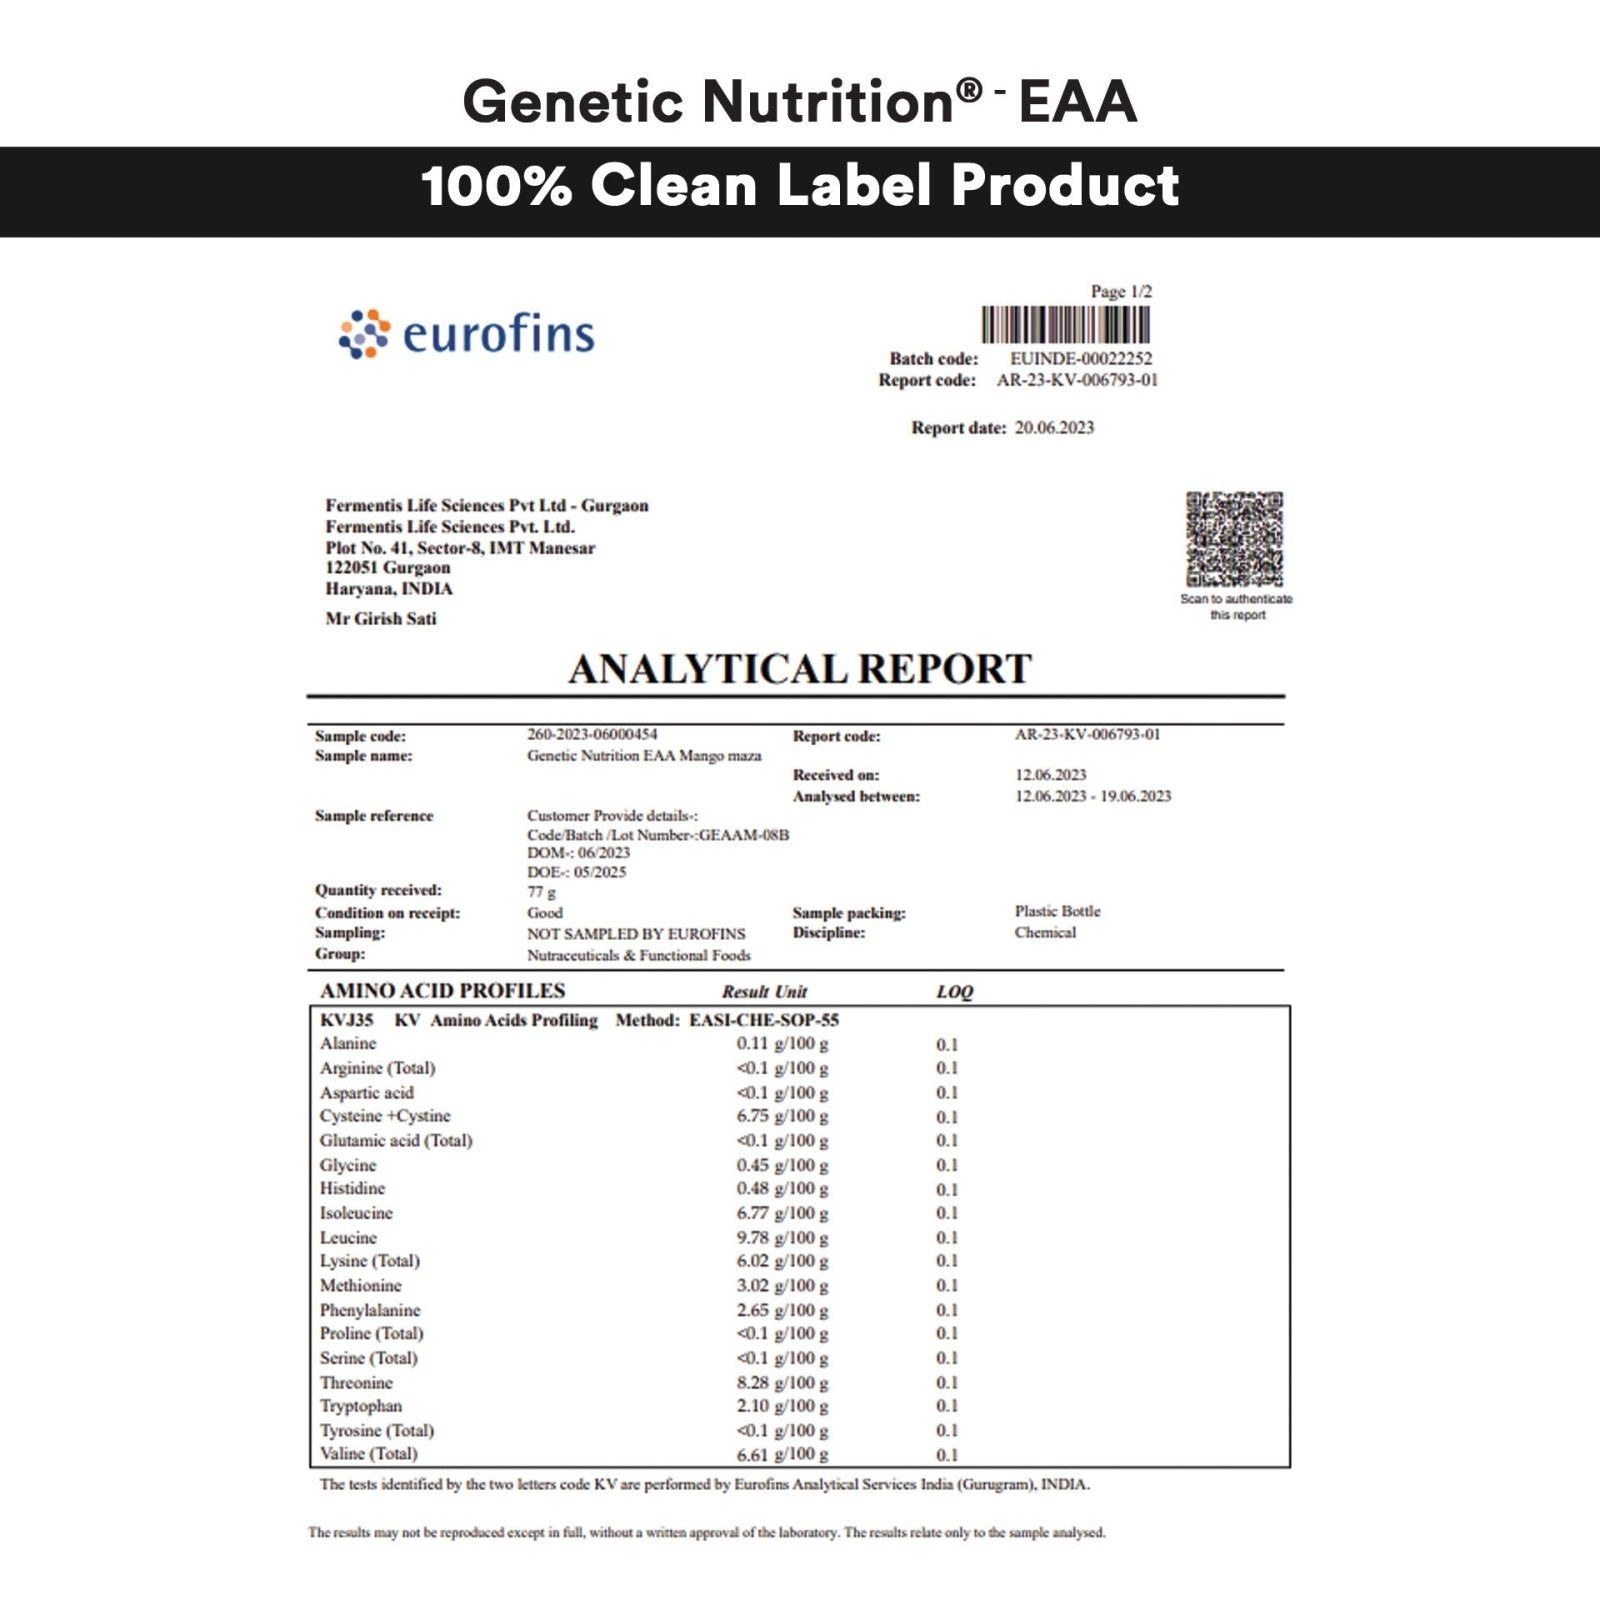 Ultra EAA | Essential Amino Acids - Genetic Nutrition